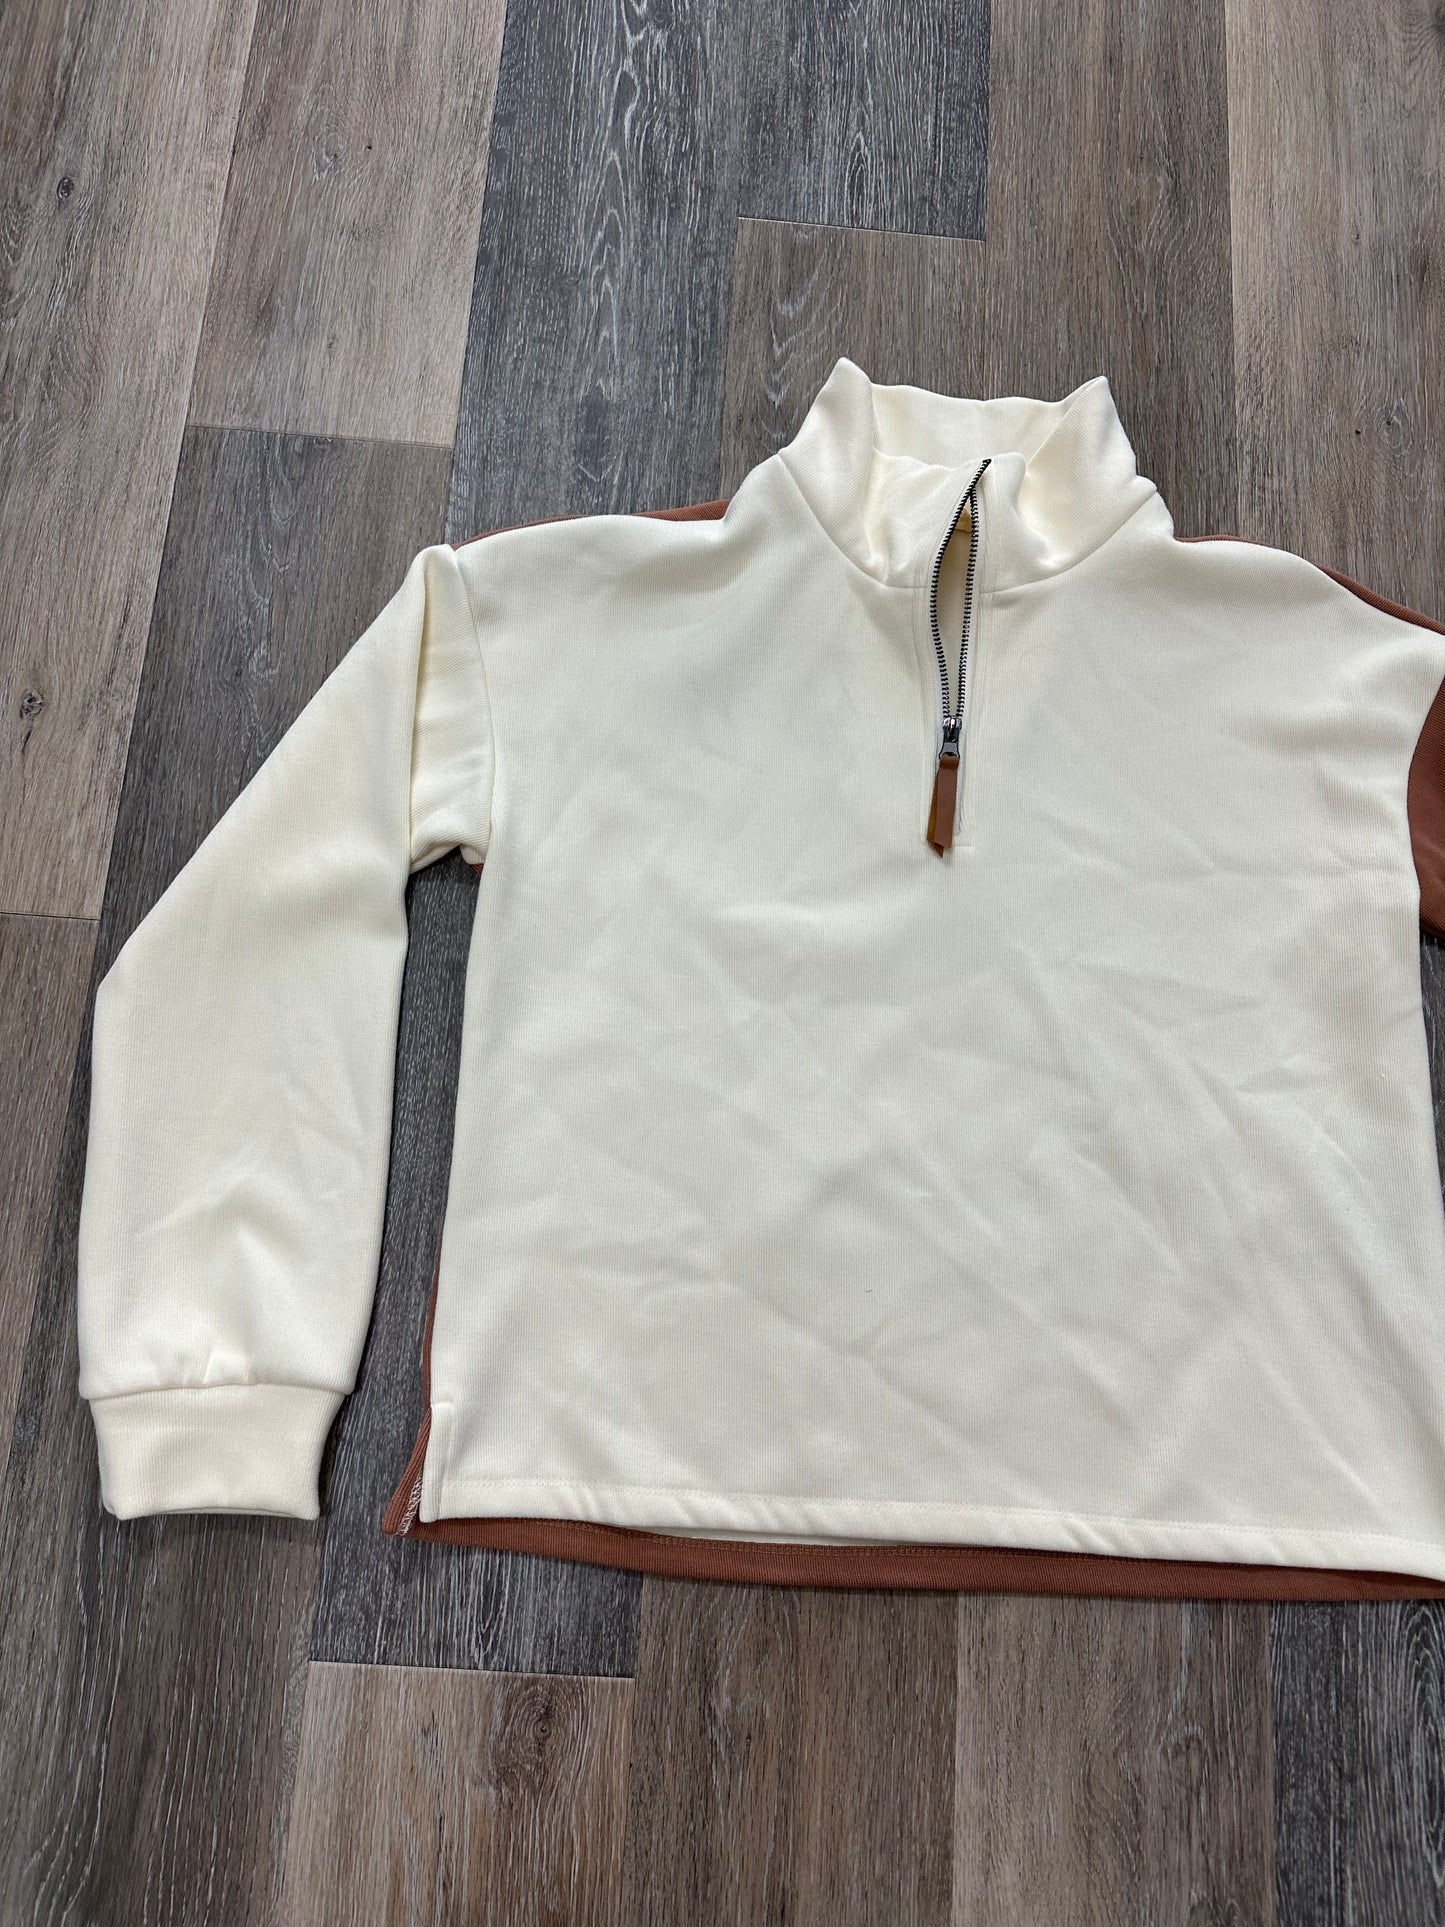 Sweatshirt Crewneck By Hem & Thread  Size: M